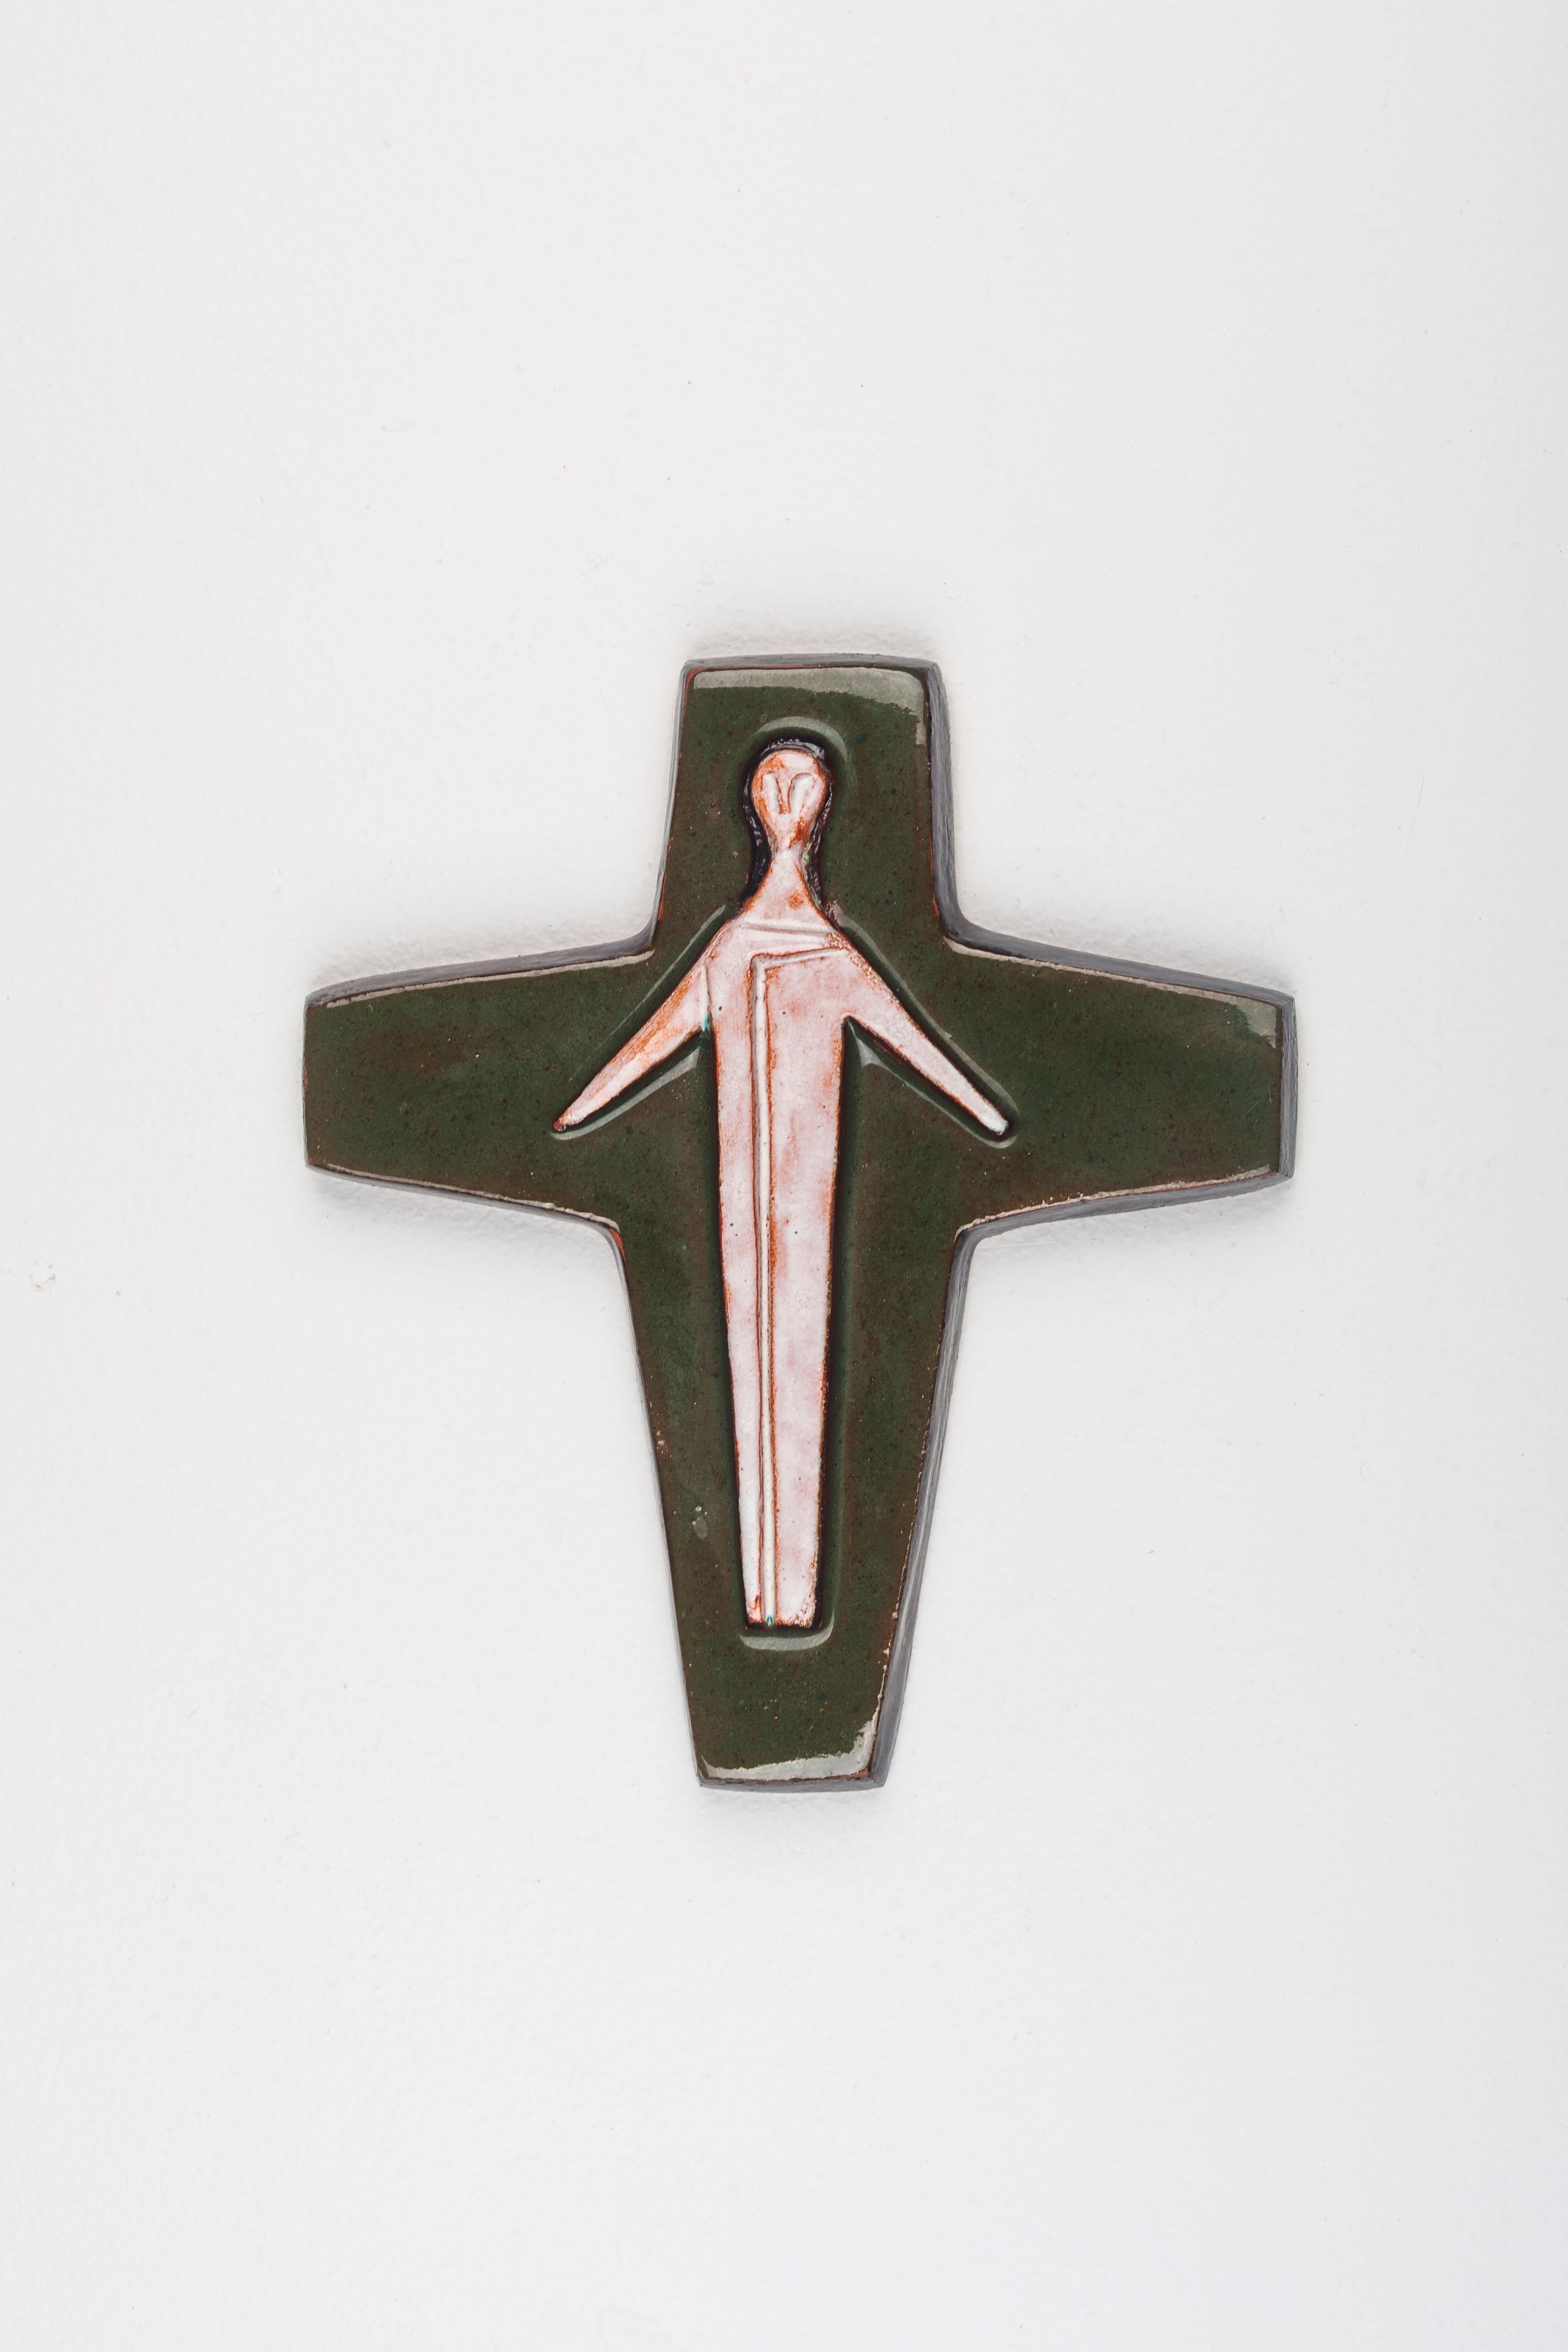 Mid-Century Modern Midcentury European Glossy Ceramic Cross - Otherworldly Christ Figure For Sale